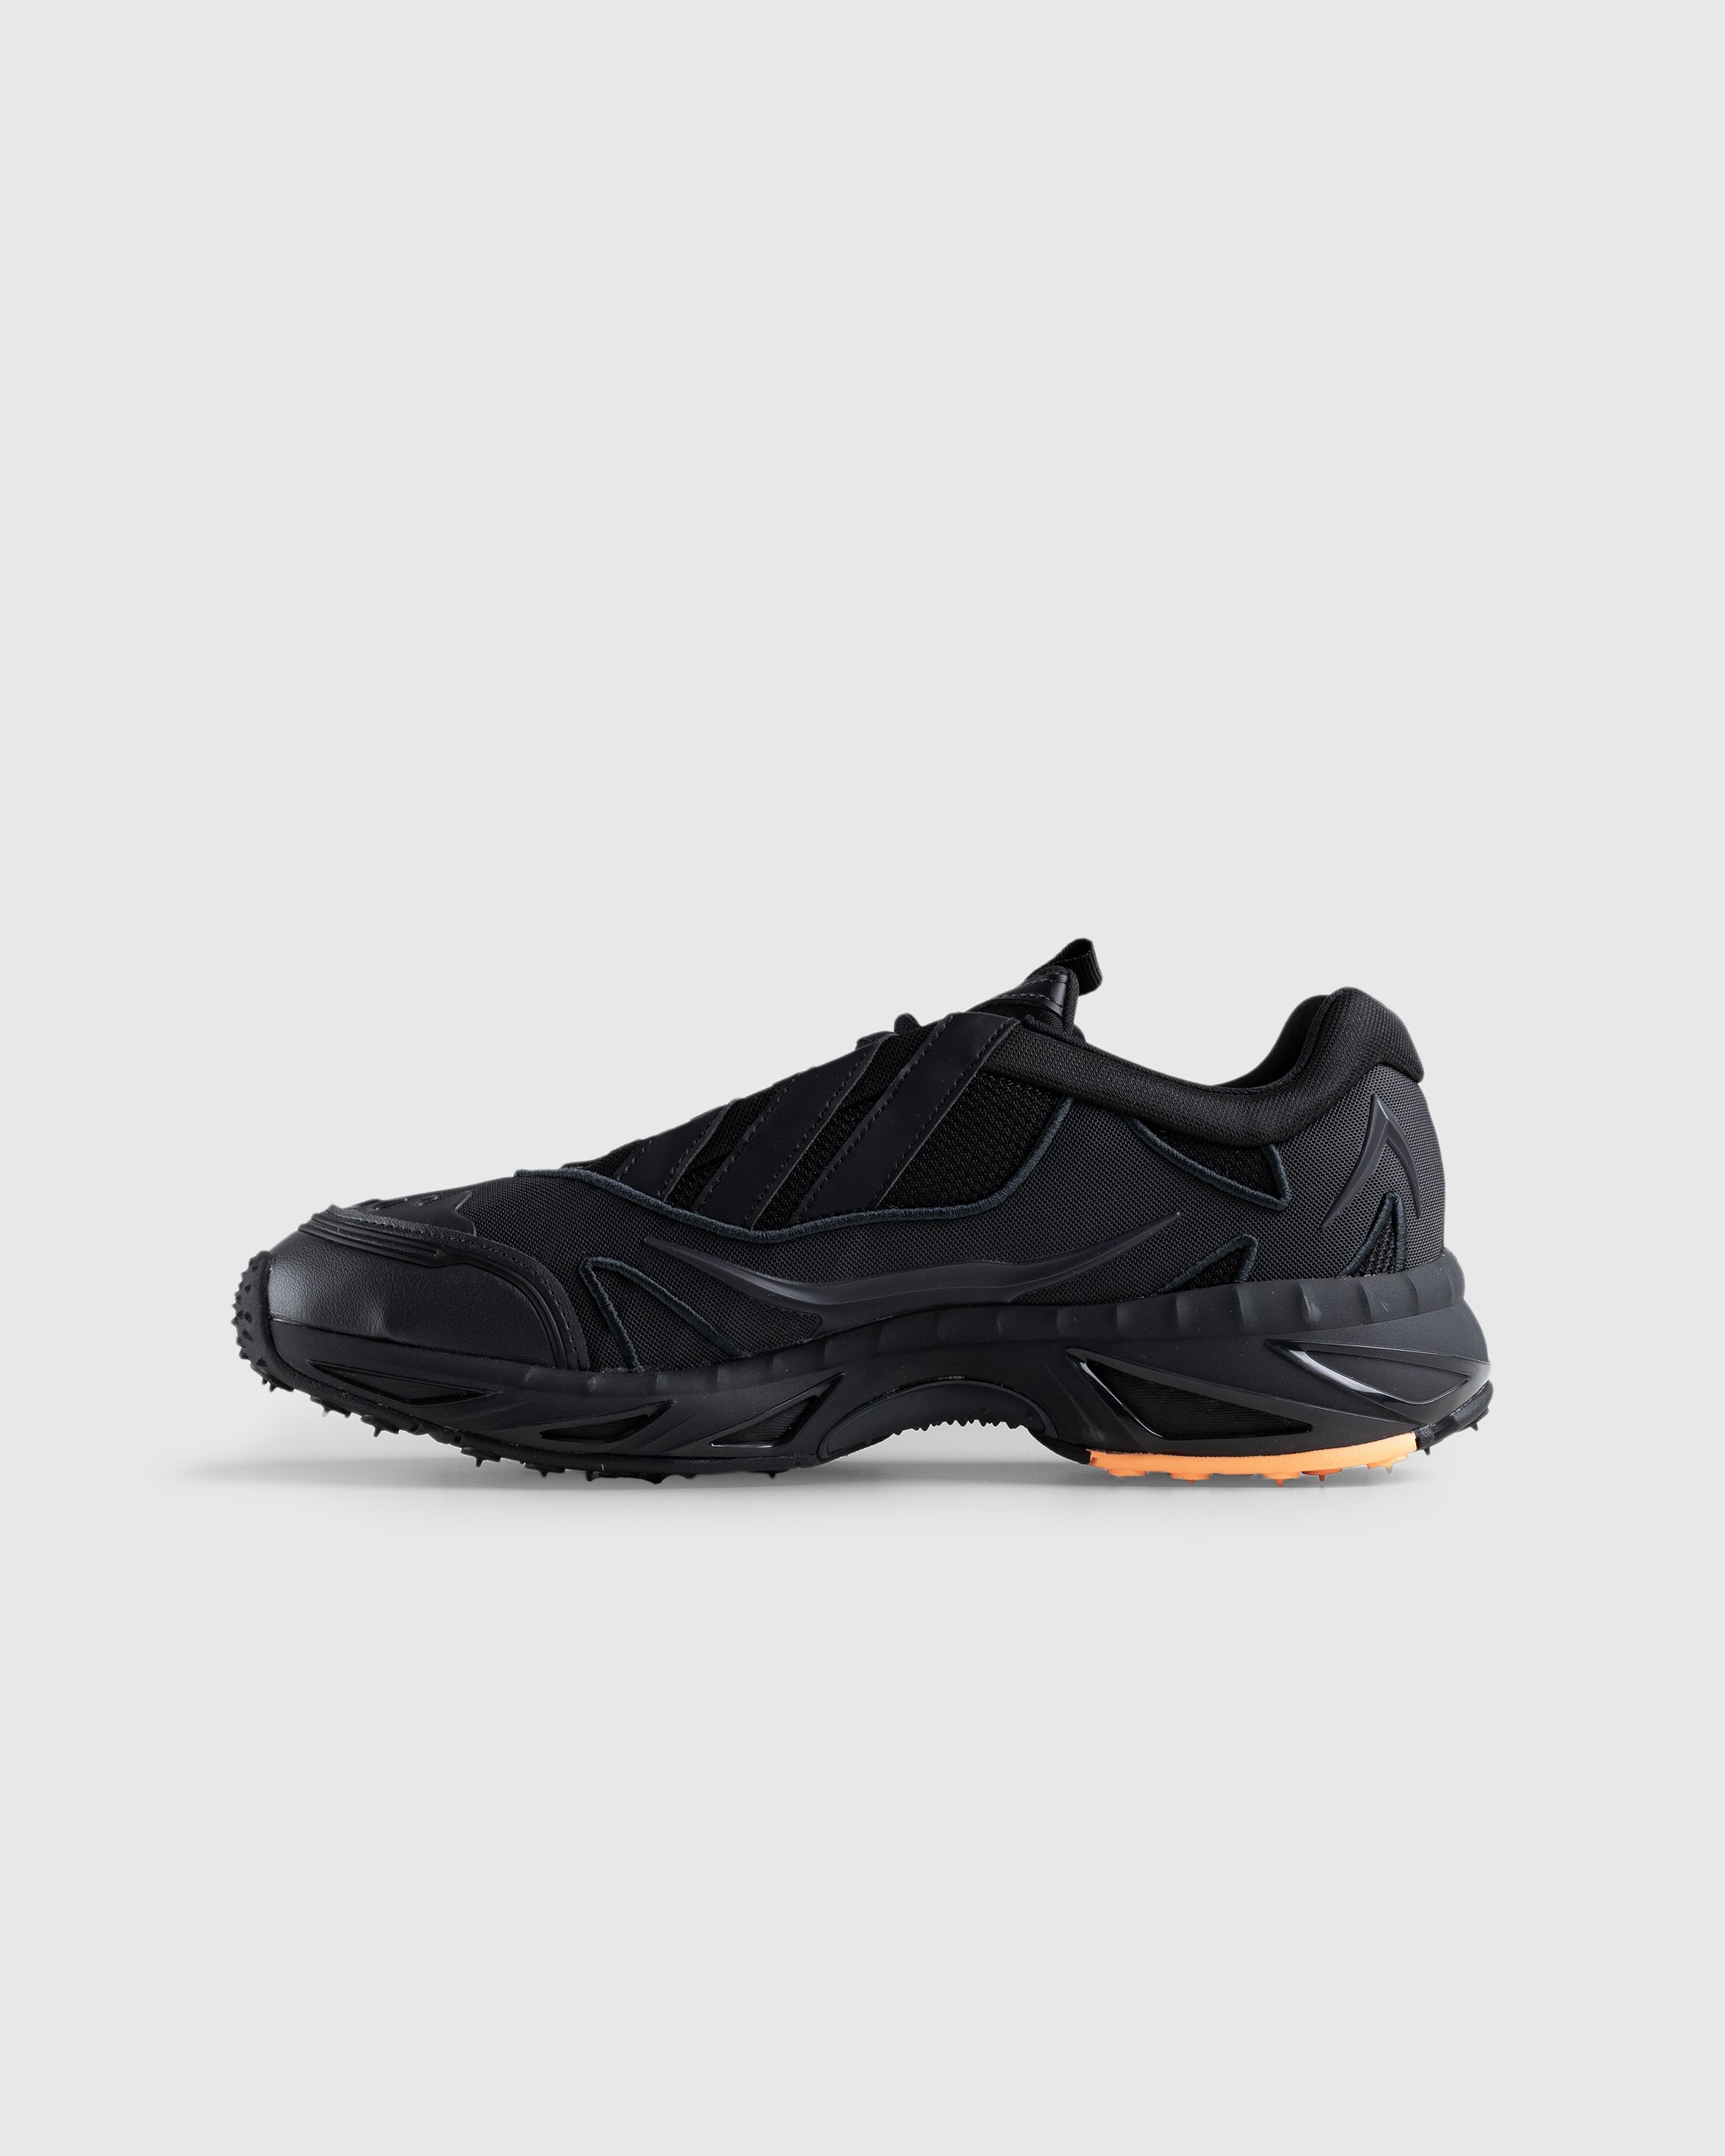 Adidas - Xare Boost Black - Footwear - Black - Image 3